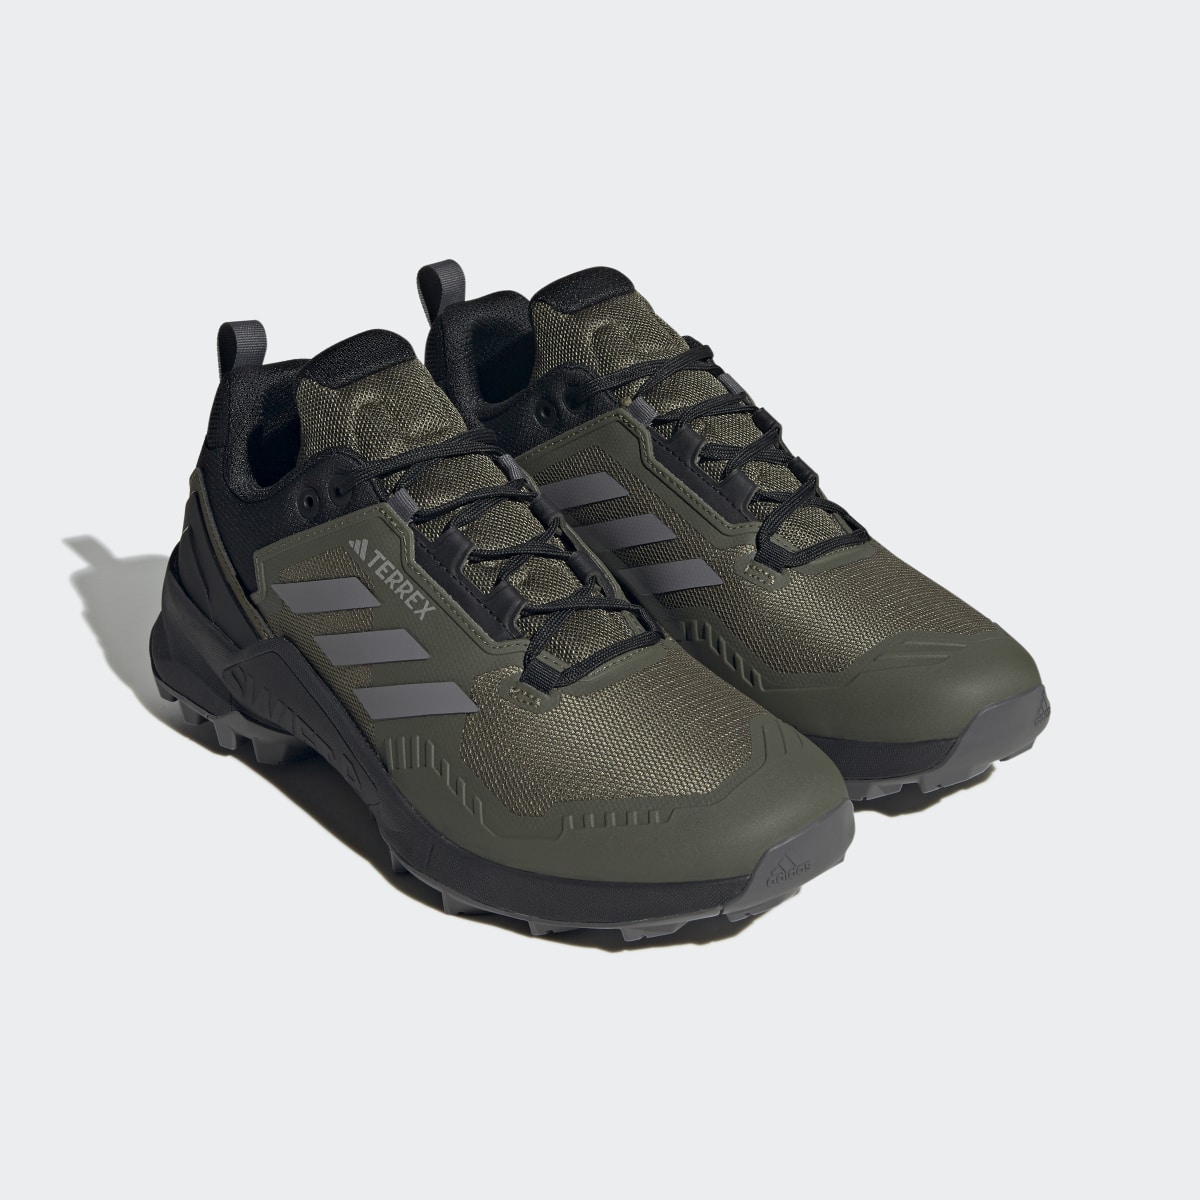 Adidas Terrex Swift R3 Hiking Shoes. 5